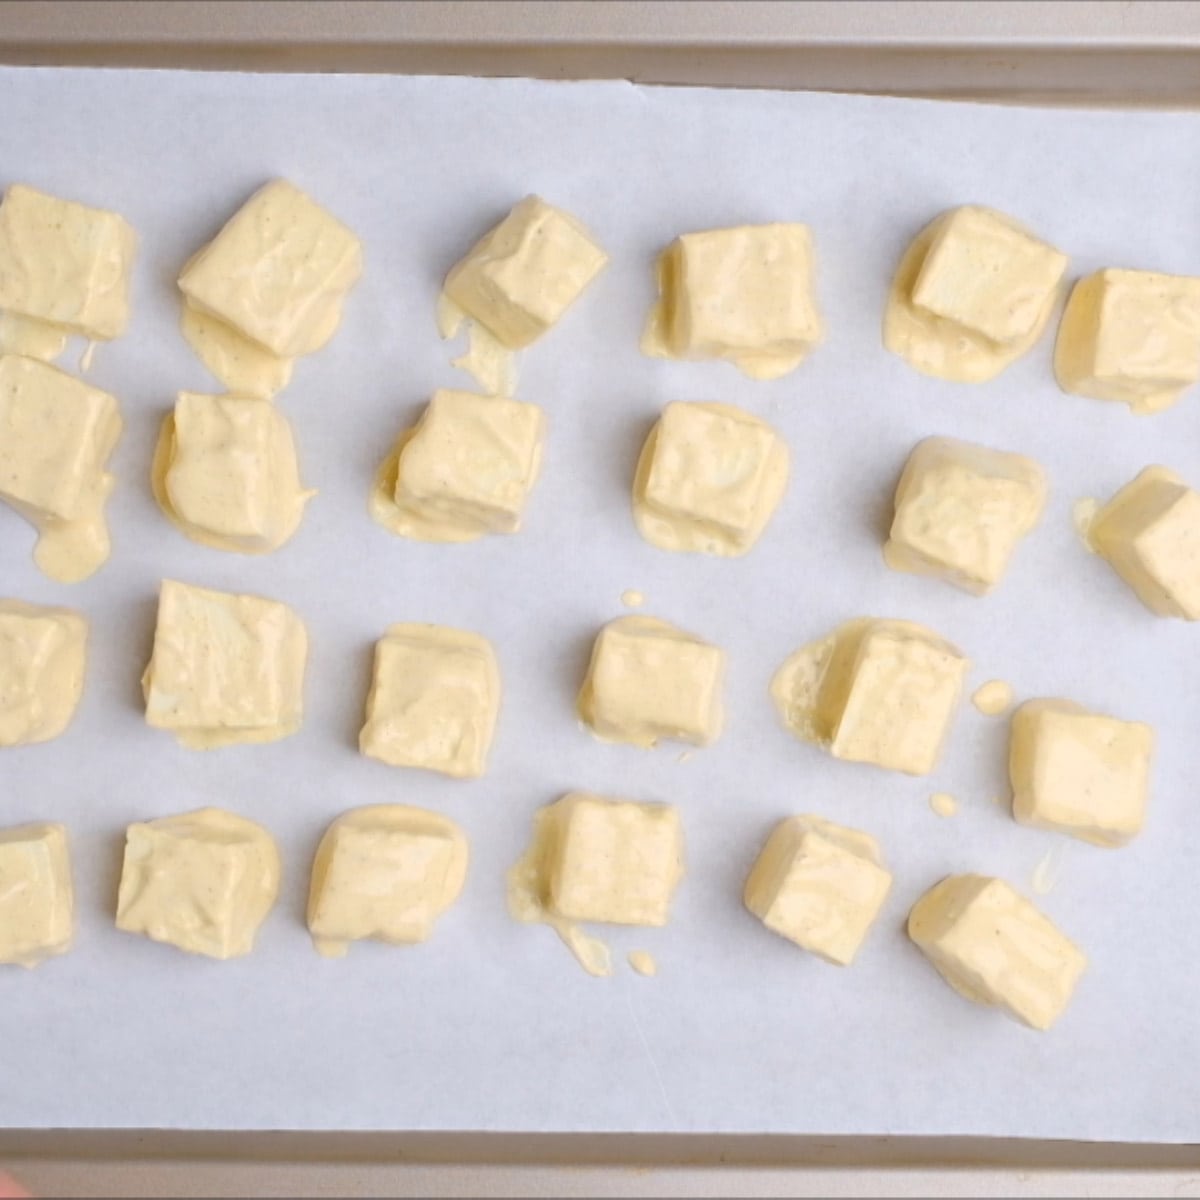 Arrange tofu in baking tray